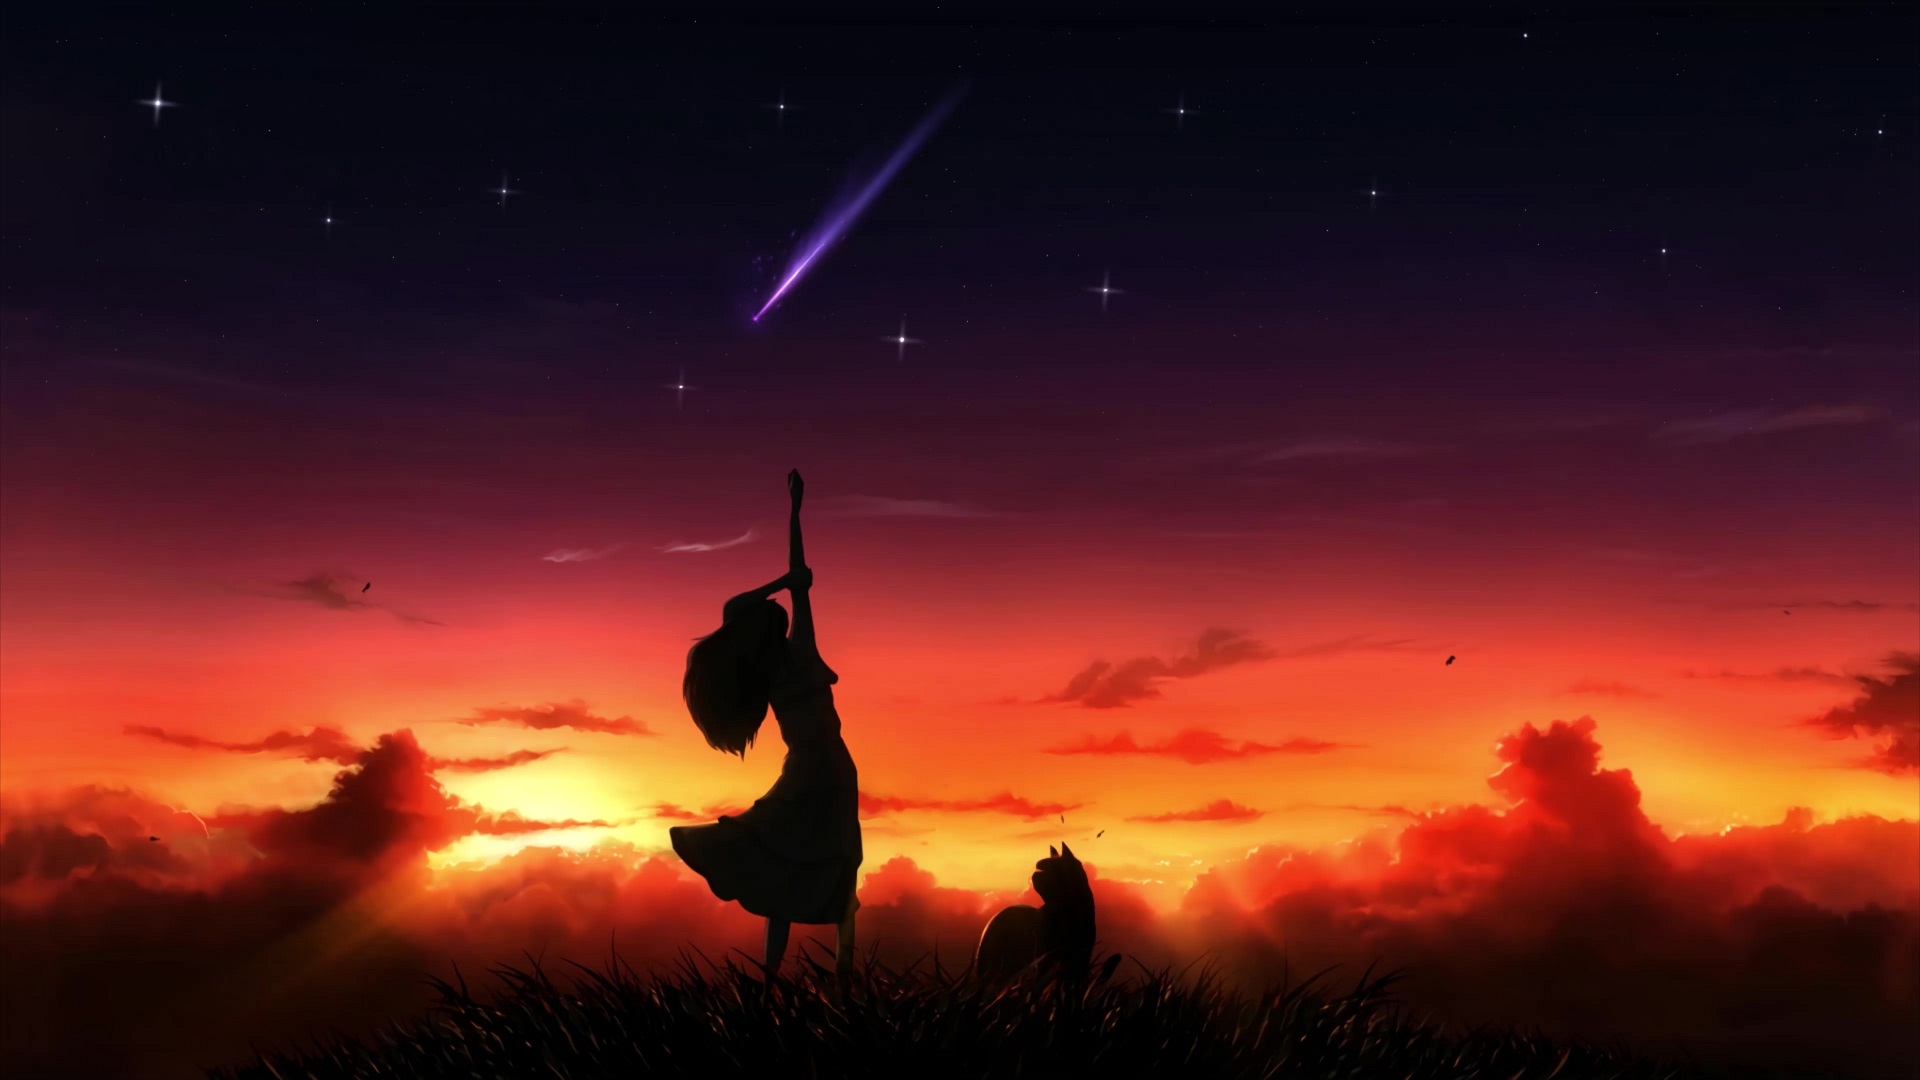 Wallpaper ID 890941  Anime Original Sunset Girl City Shooting Star  Starry Sky 1080P free download